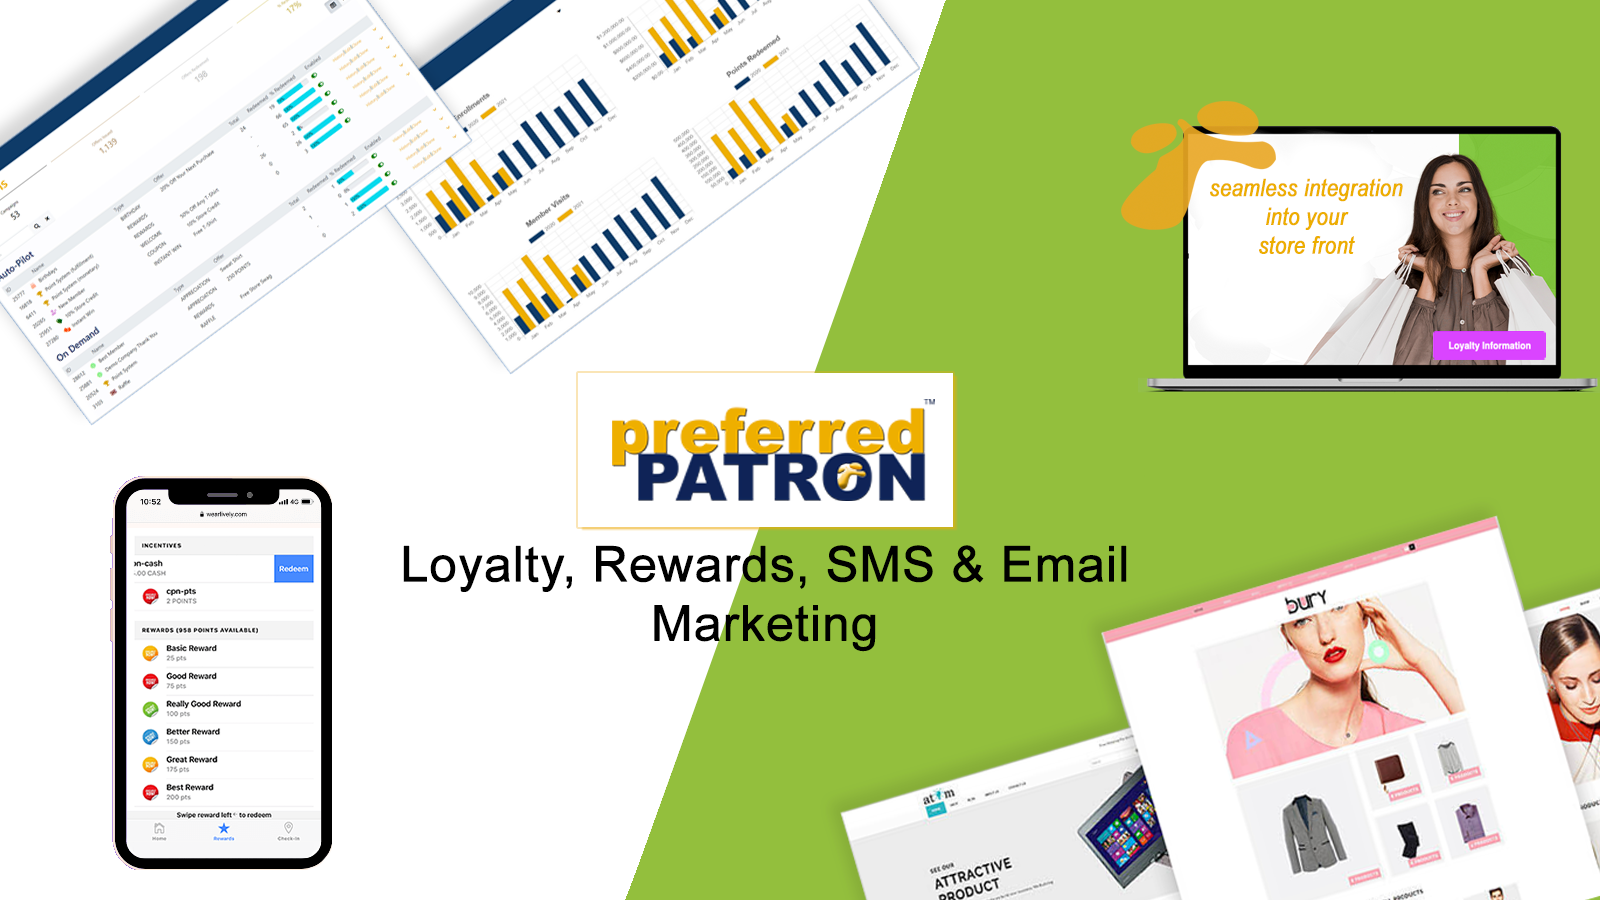 Loyalty, Rewards, SMS & Email Marketing